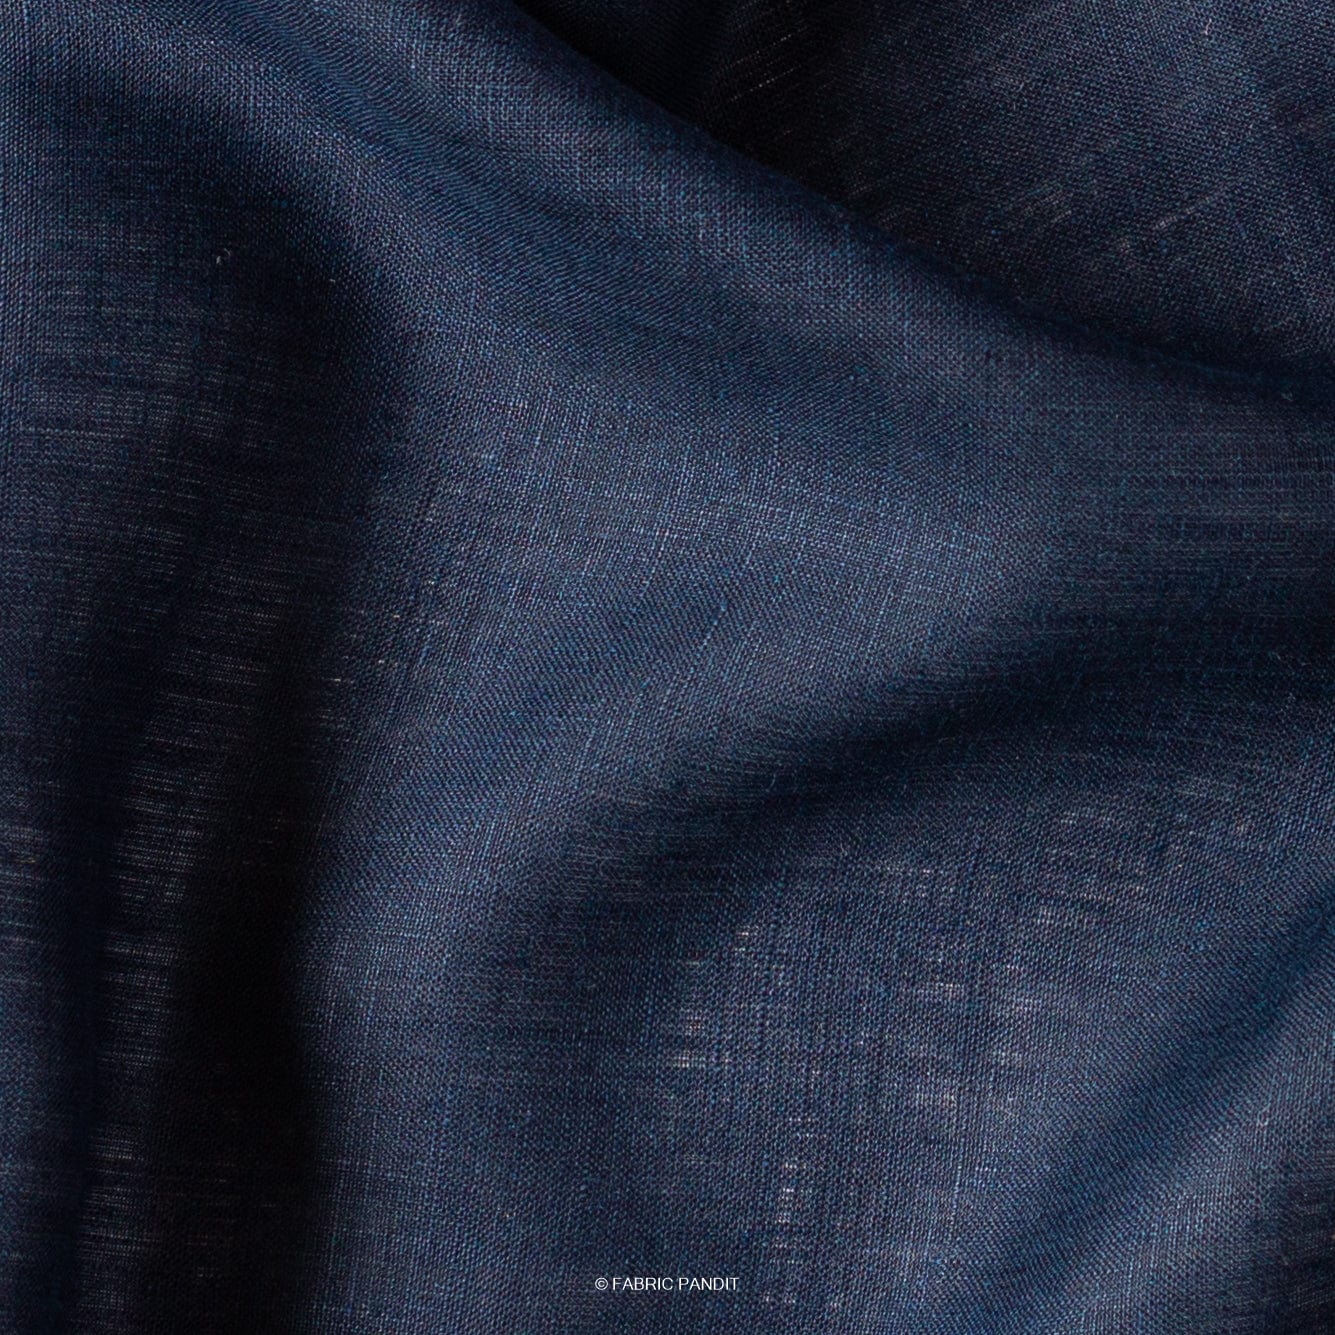 Fabric Pandit Cut Piece (CUT PIECE) Denim blue Plain Premium 60 Lea Pure Linen Fabric (Width 58 inch)